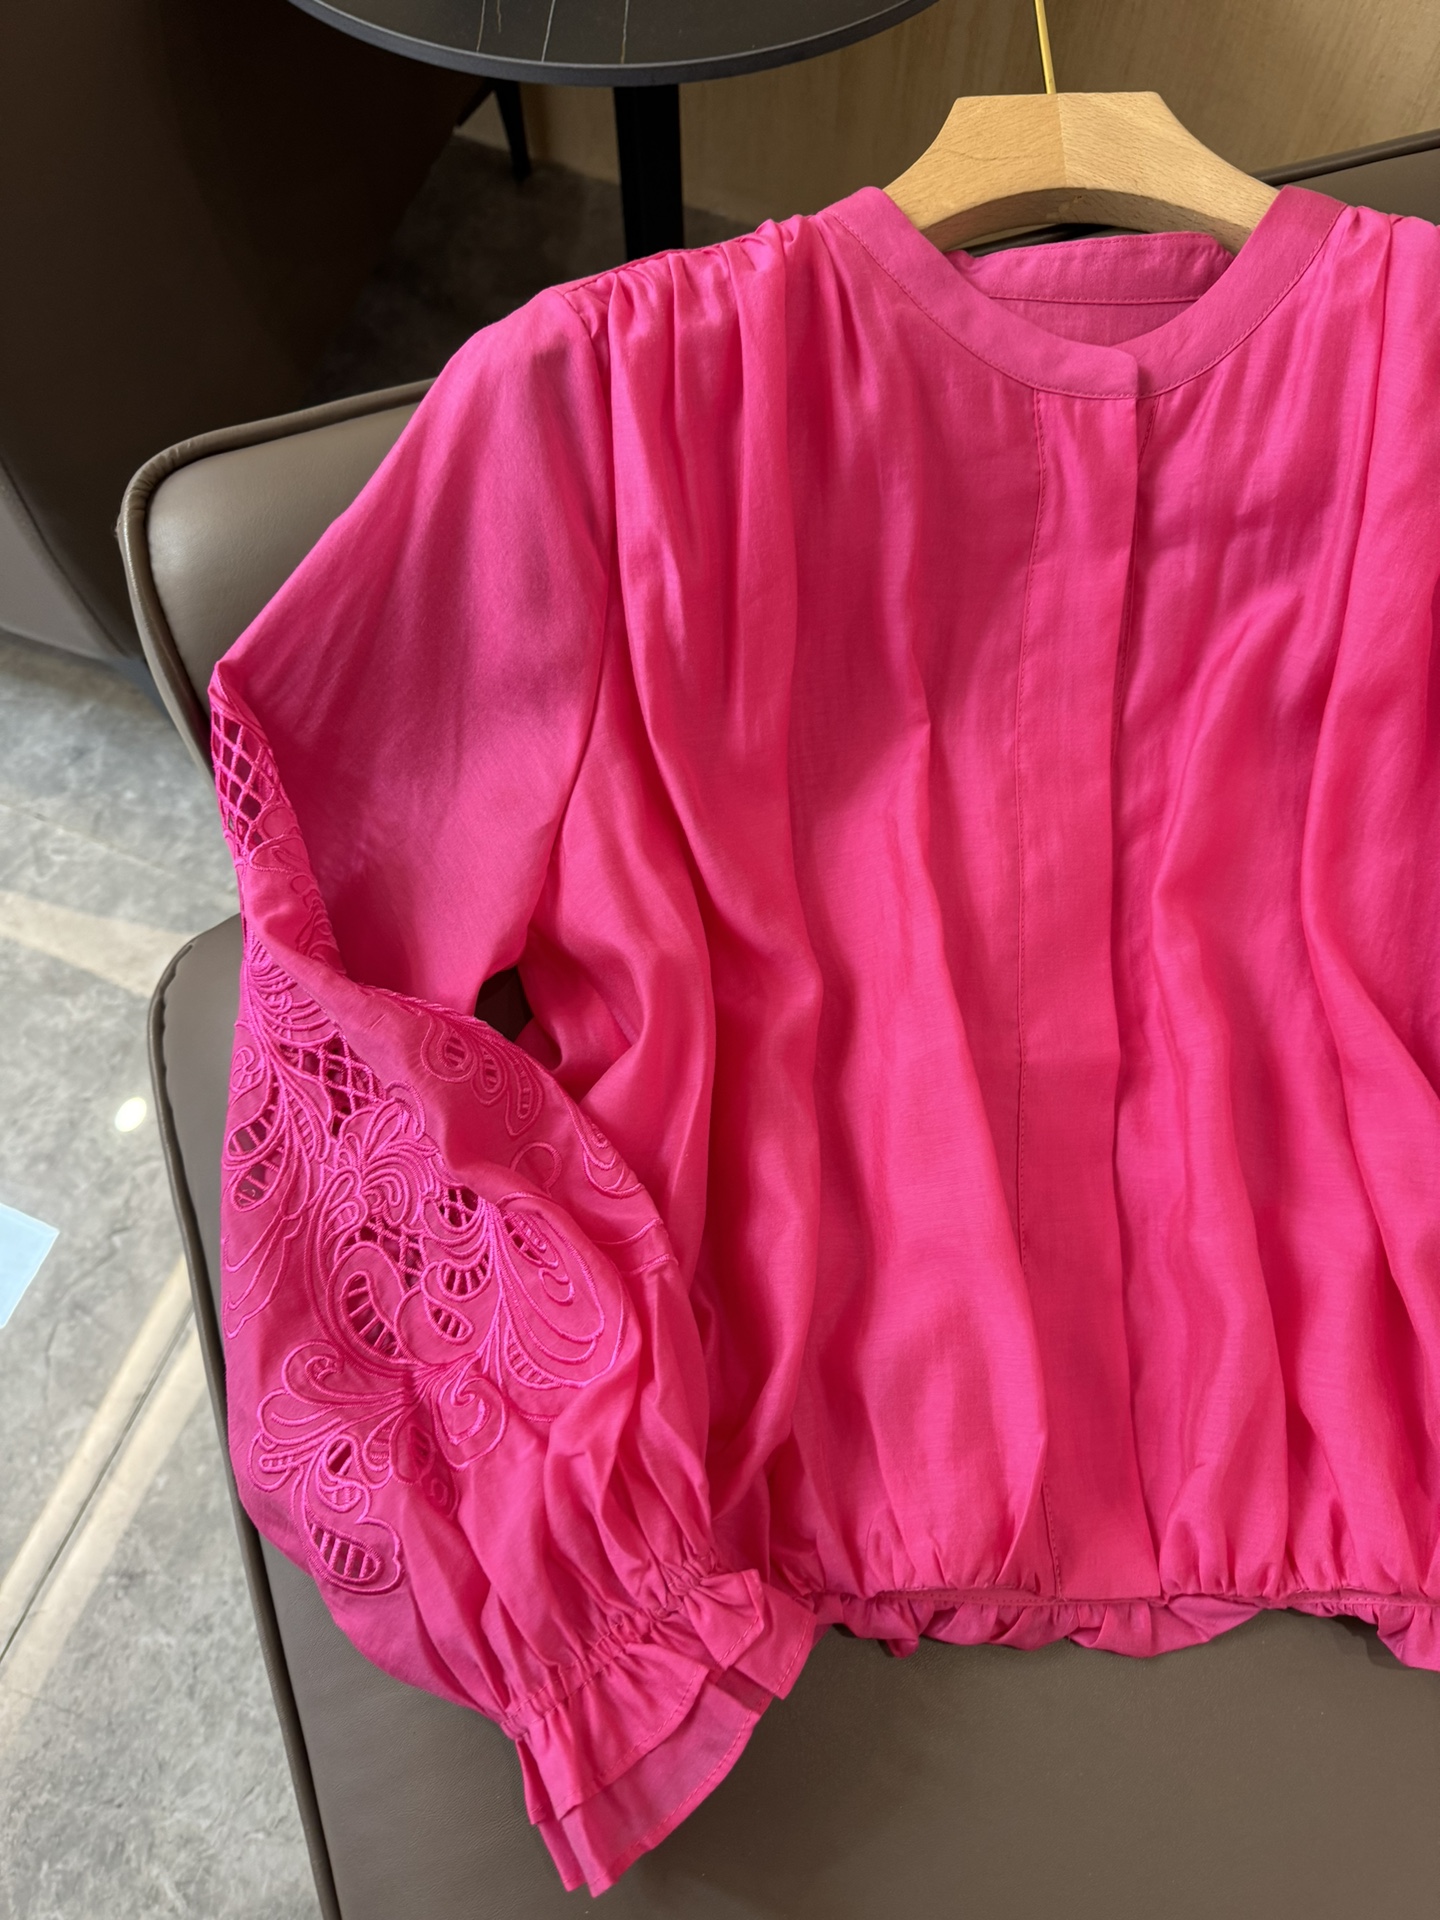 LK001#新款衬衫ERMANNOSCERVINO依玛诺ES镂空绣花天丝棉短款长袖衬衫粉色白色火龙果色S